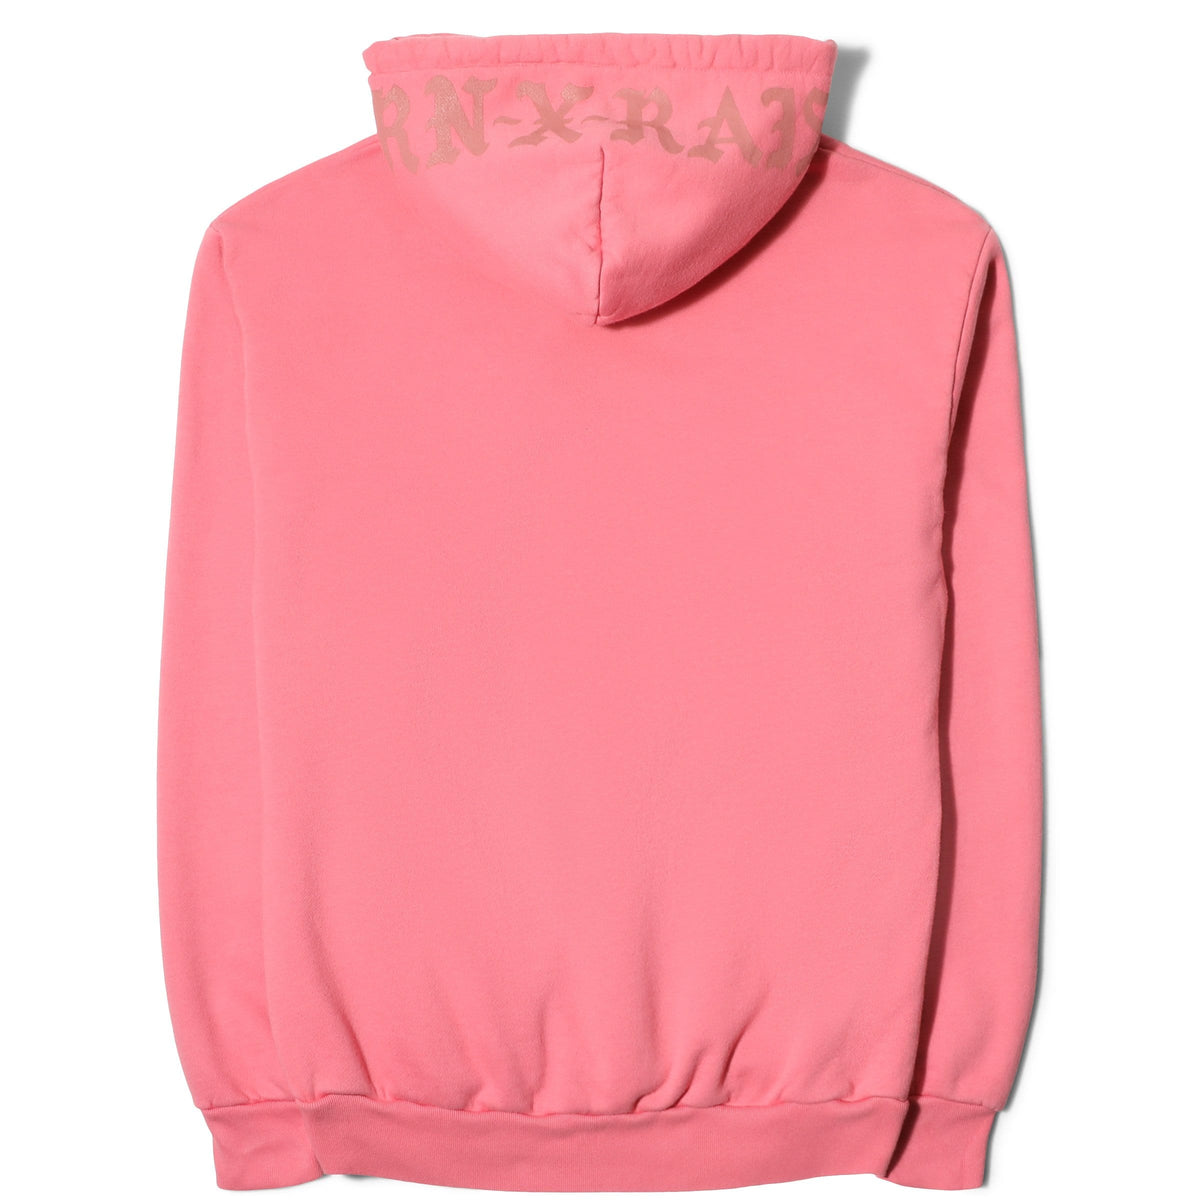 stone island dusty pink sweatshirt